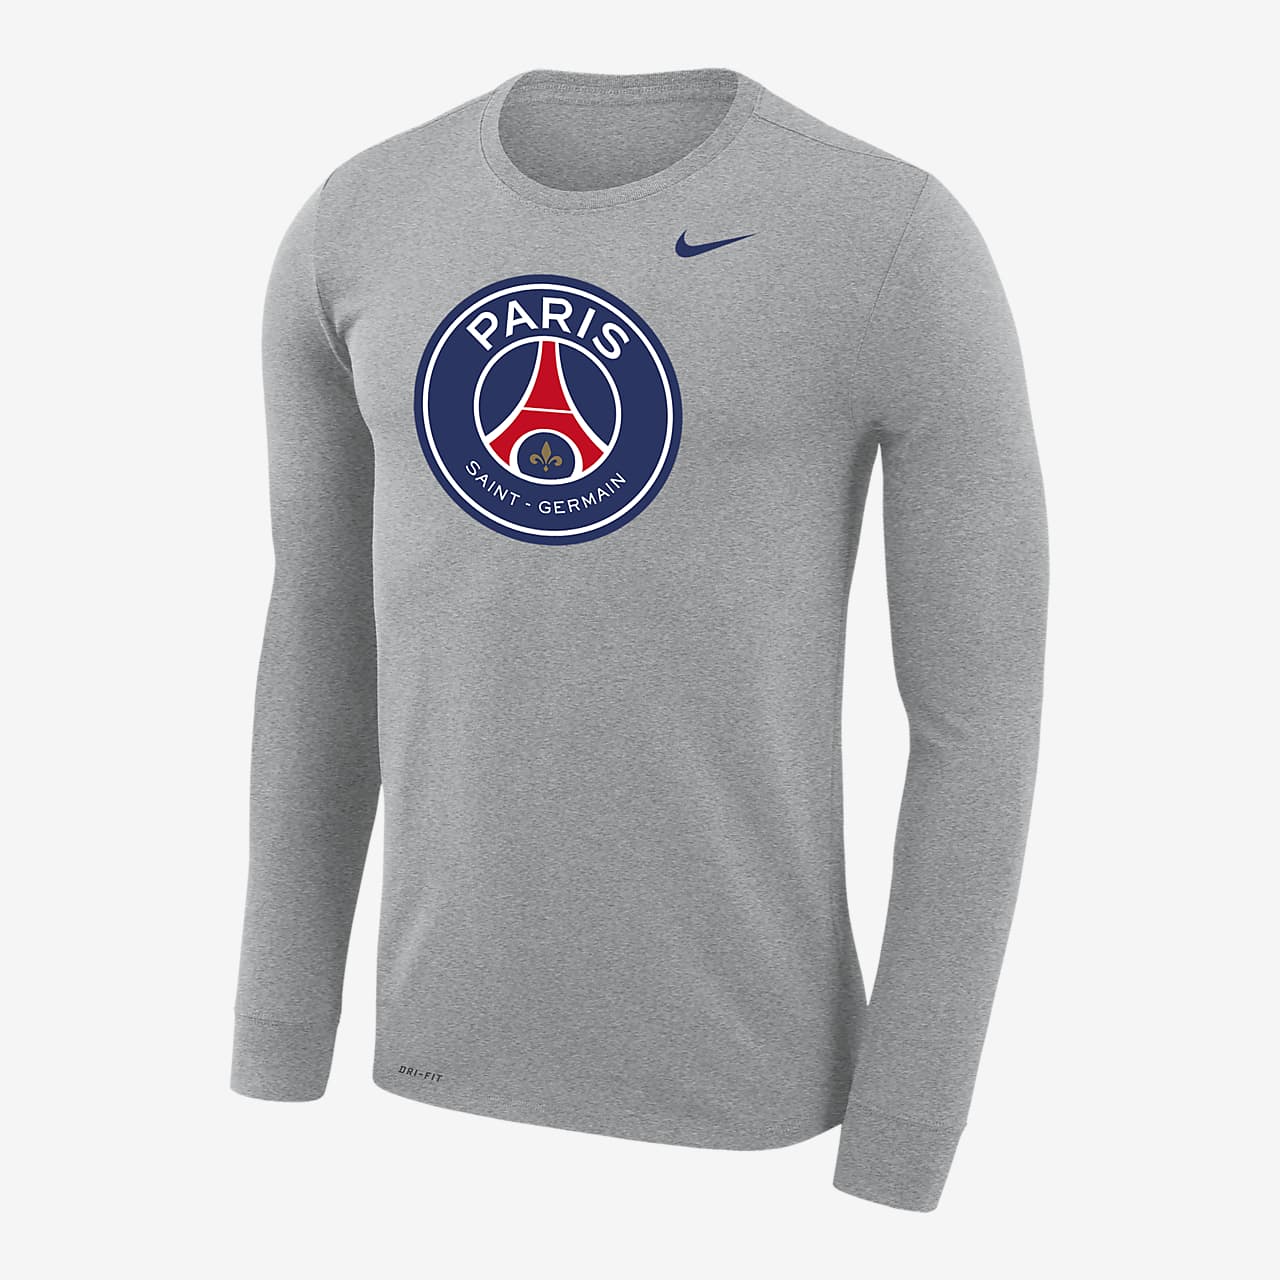 Såvel synge Karakter Paris Saint-Germain Legend Men's Nike Dri-FIT Long-Sleeve T-Shirt. Nike.com